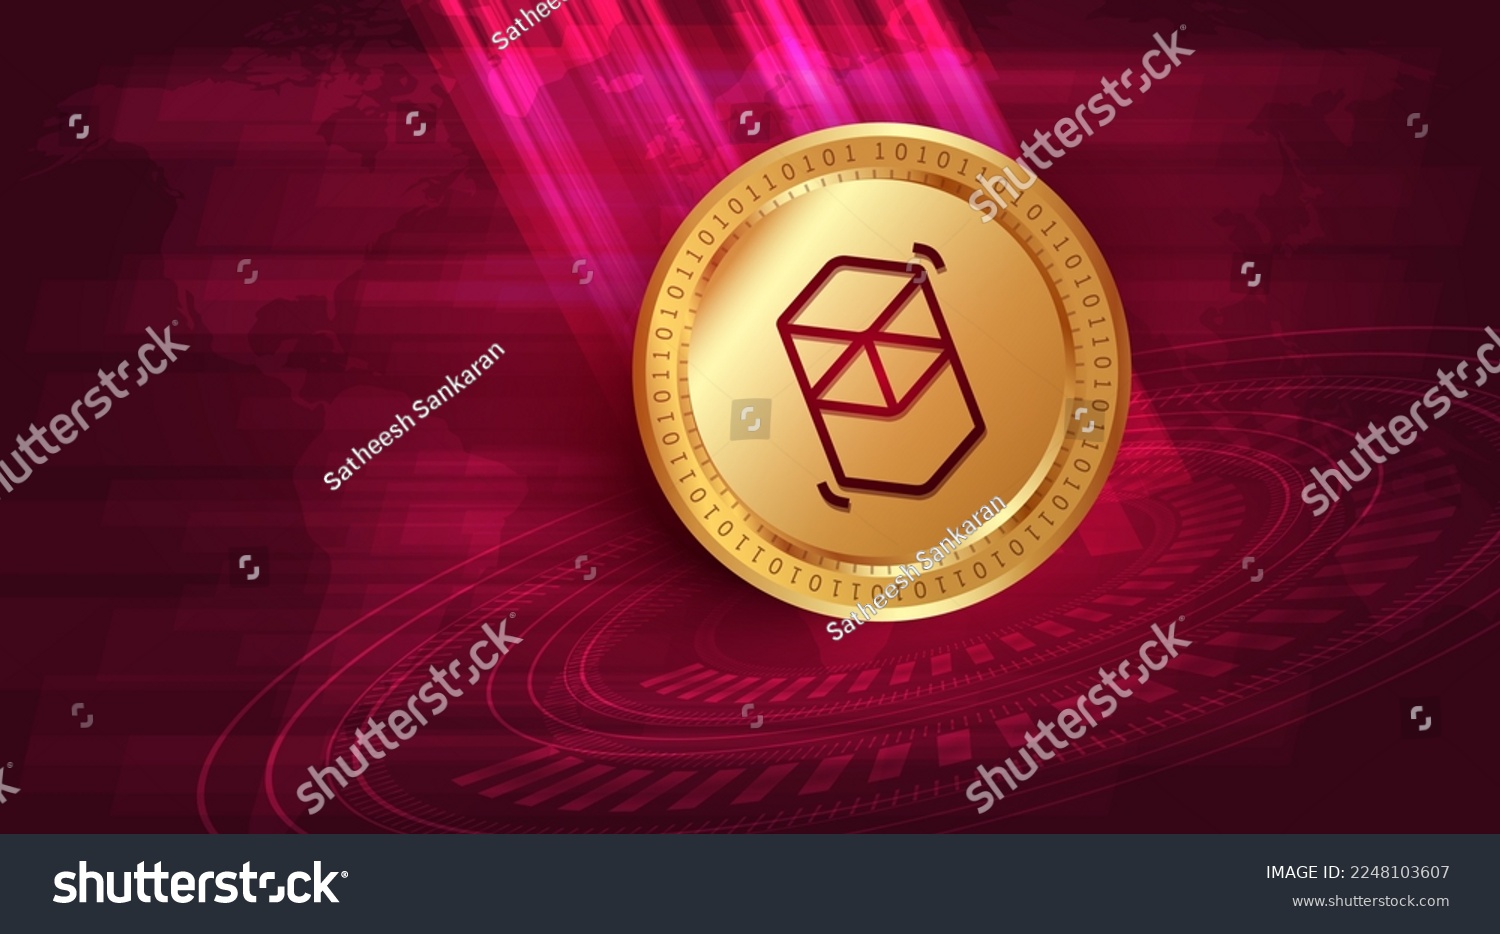 SVG of Fantom (FTM) crypto currency banner and background svg